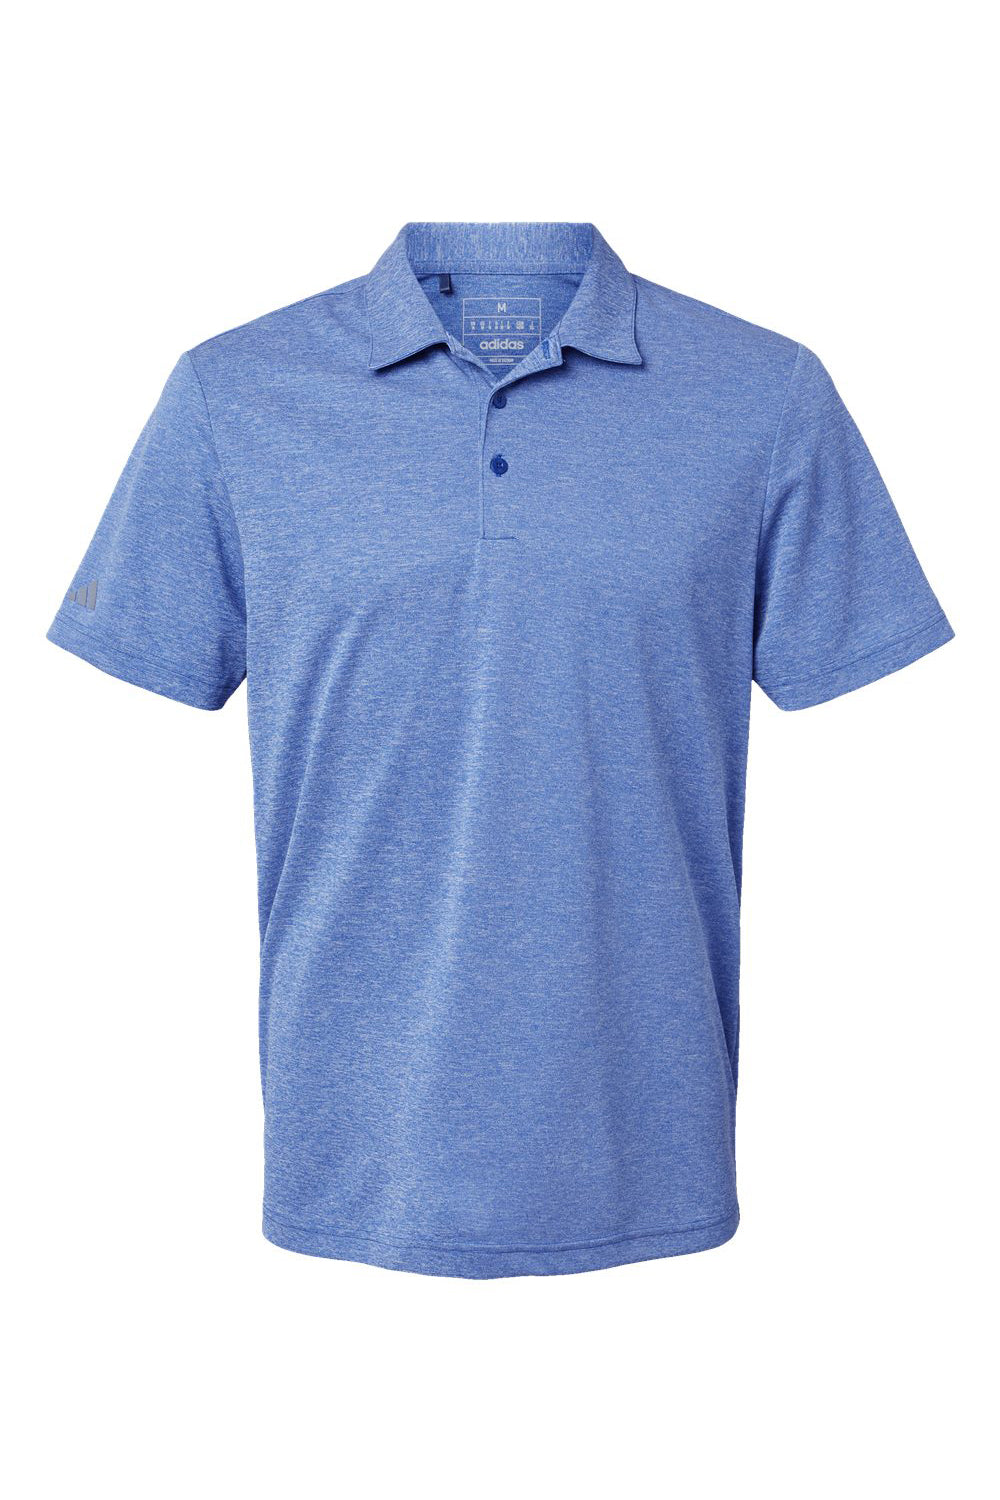 Adidas A582 Mens Heathered Short Sleeve Polo Shirt Collegiate Royal Blue Melange Flat Front